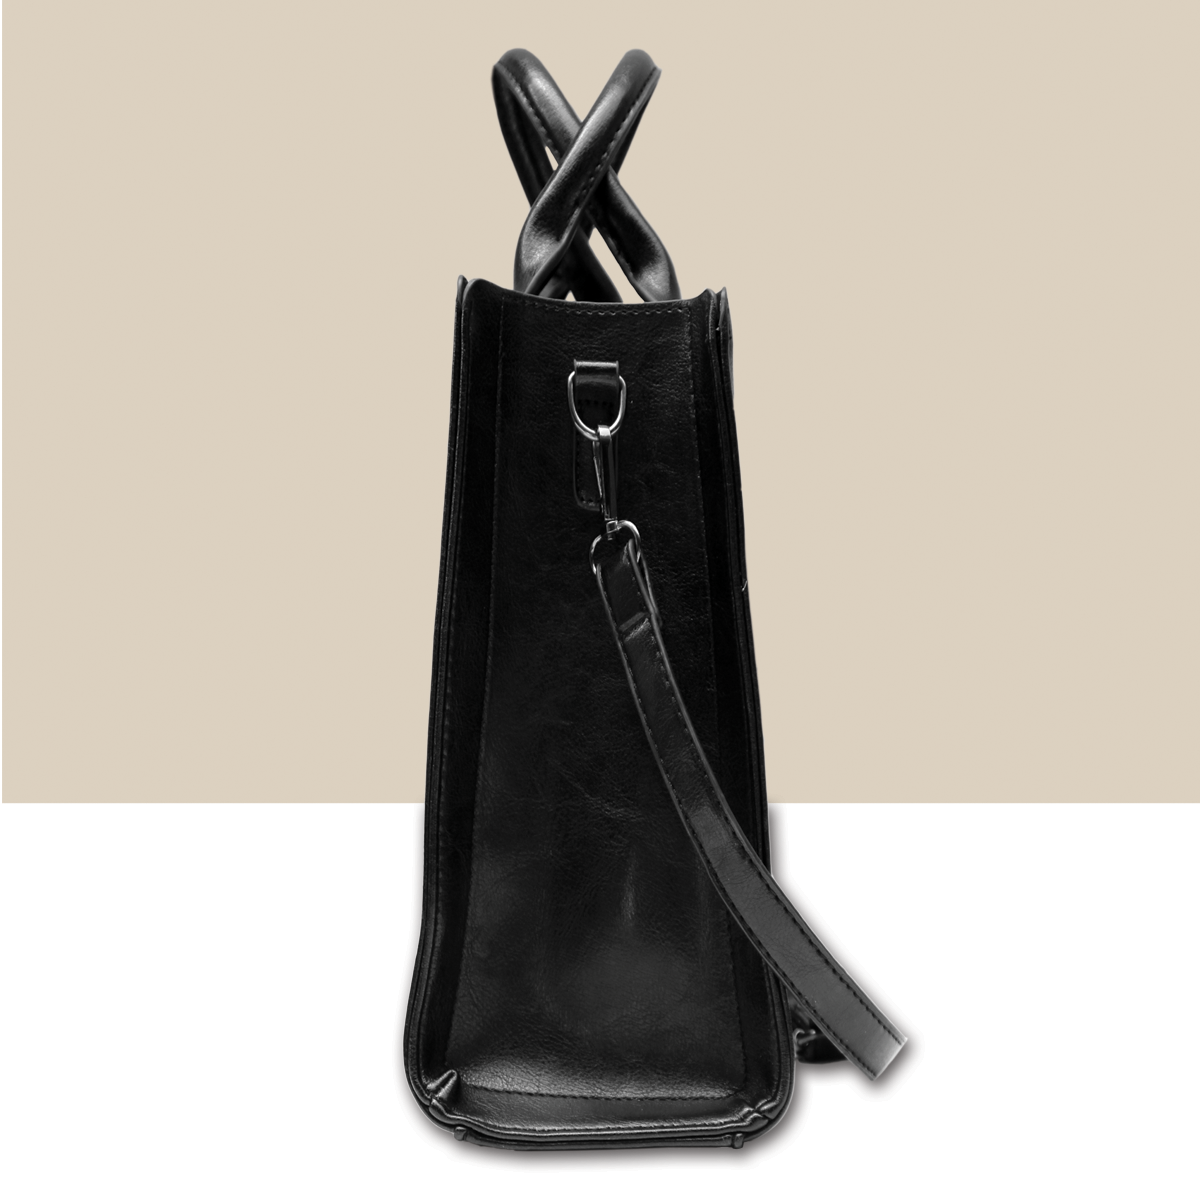 Reduce Stress At Work With Cavalier King Charles Spaniel - Luxury Handbag V2